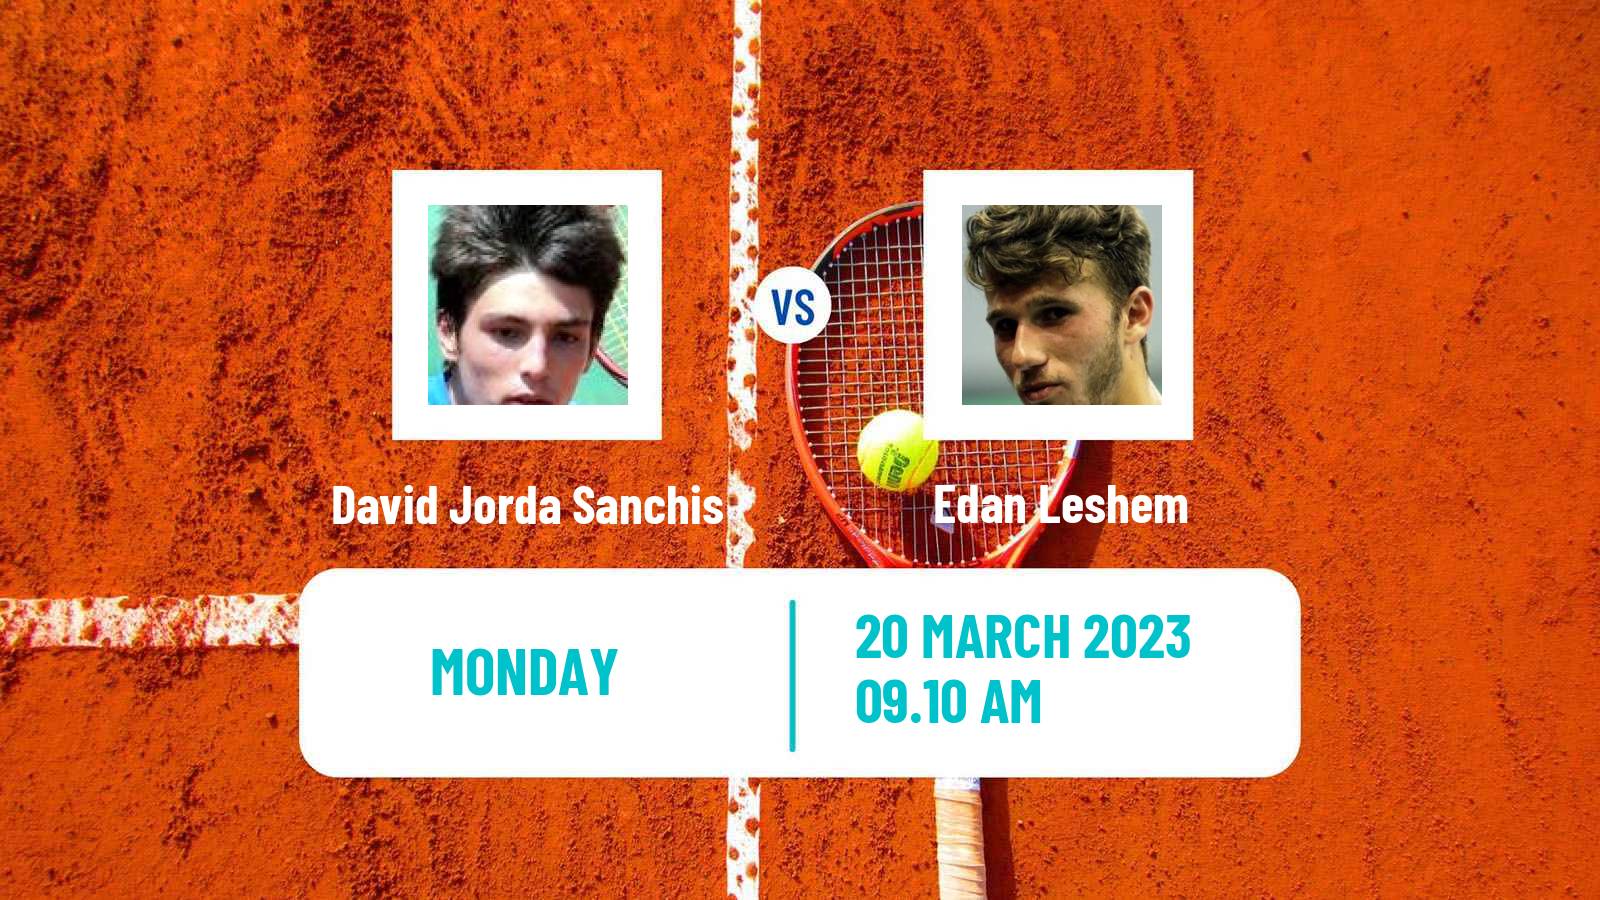 Tennis ATP Challenger David Jorda Sanchis - Edan Leshem